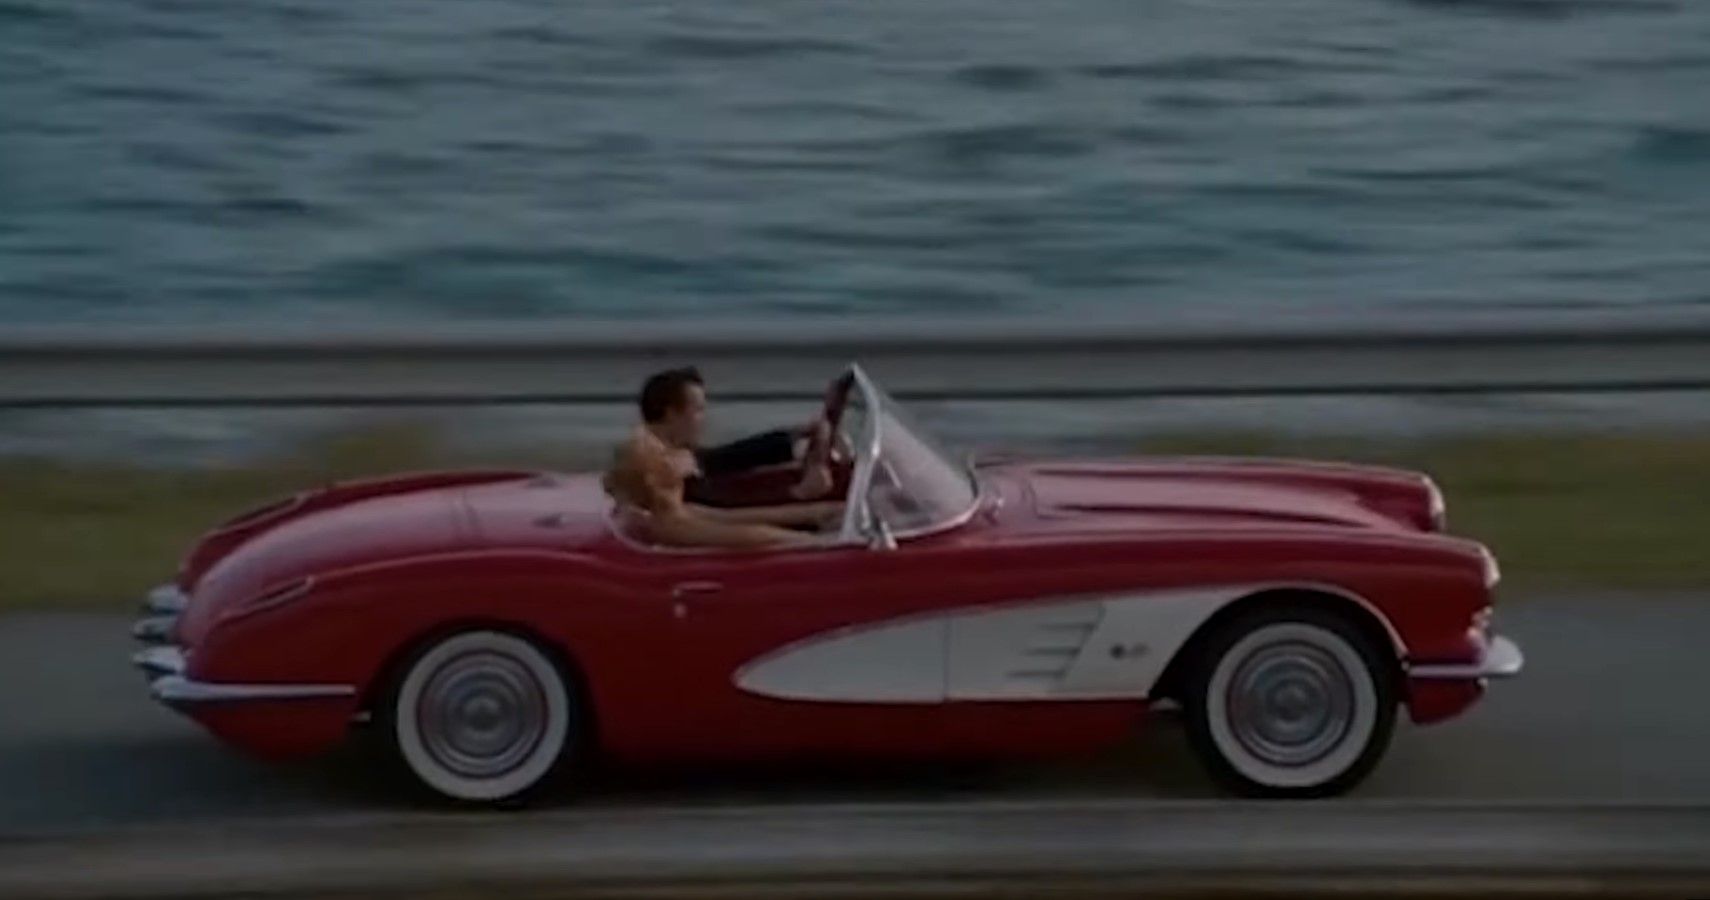 Johnny Depp riding his beloved 1969 Chevy Corvette